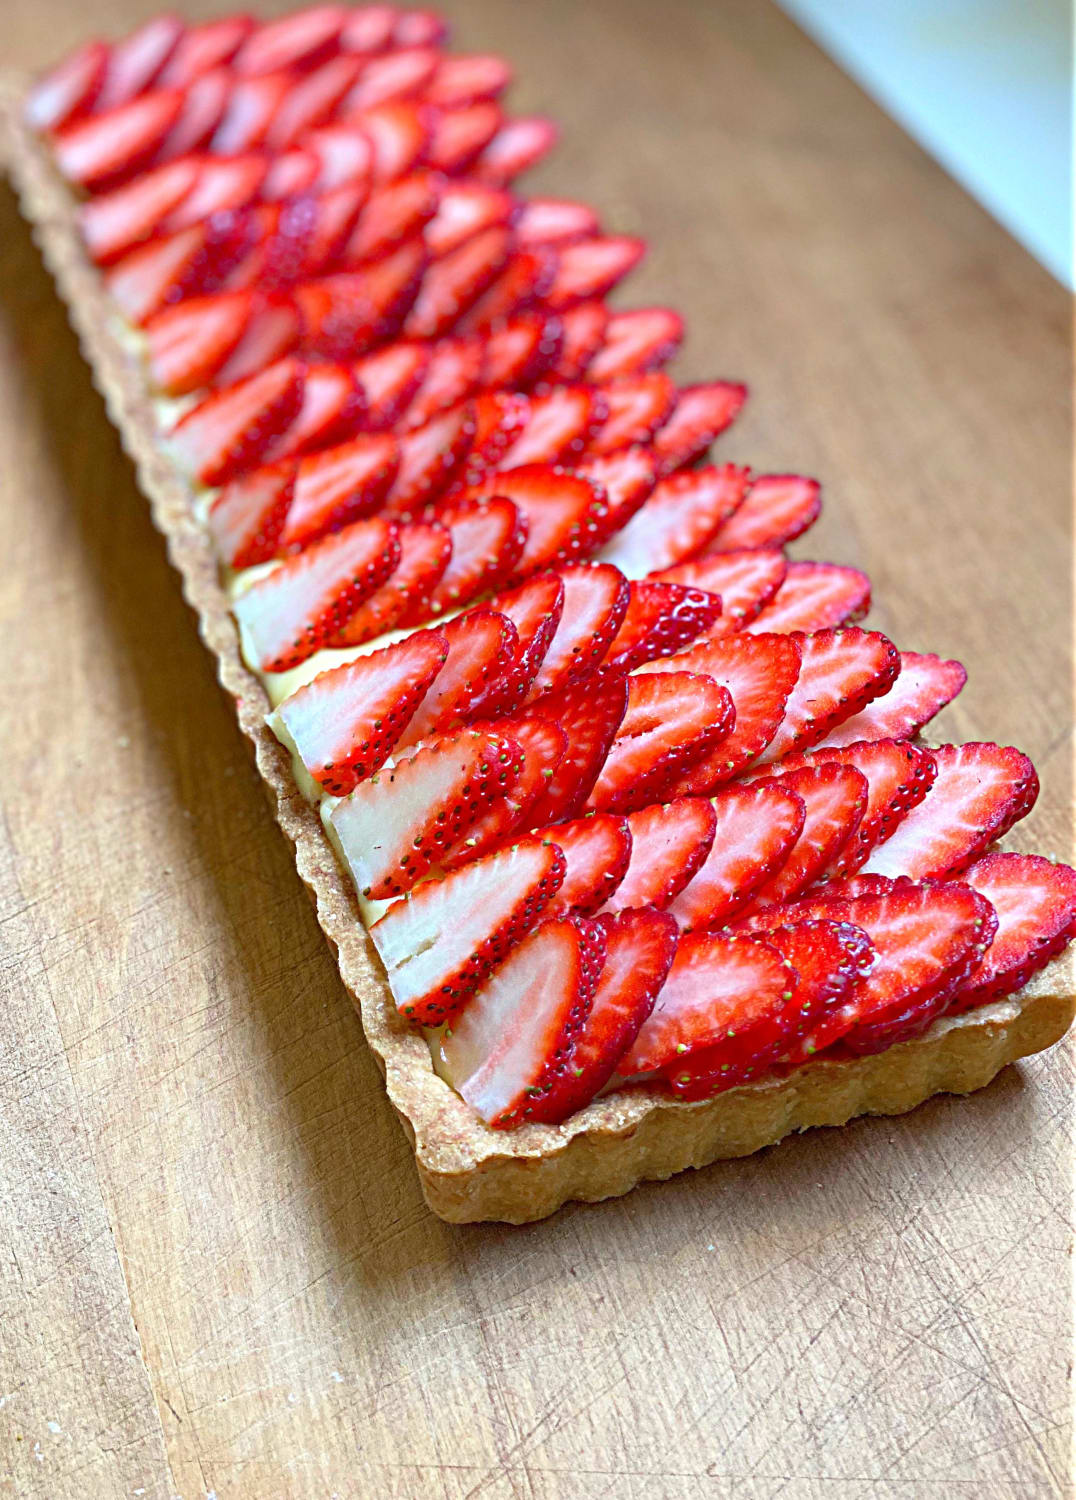 My greatest creation, this custard tart with Strawberries